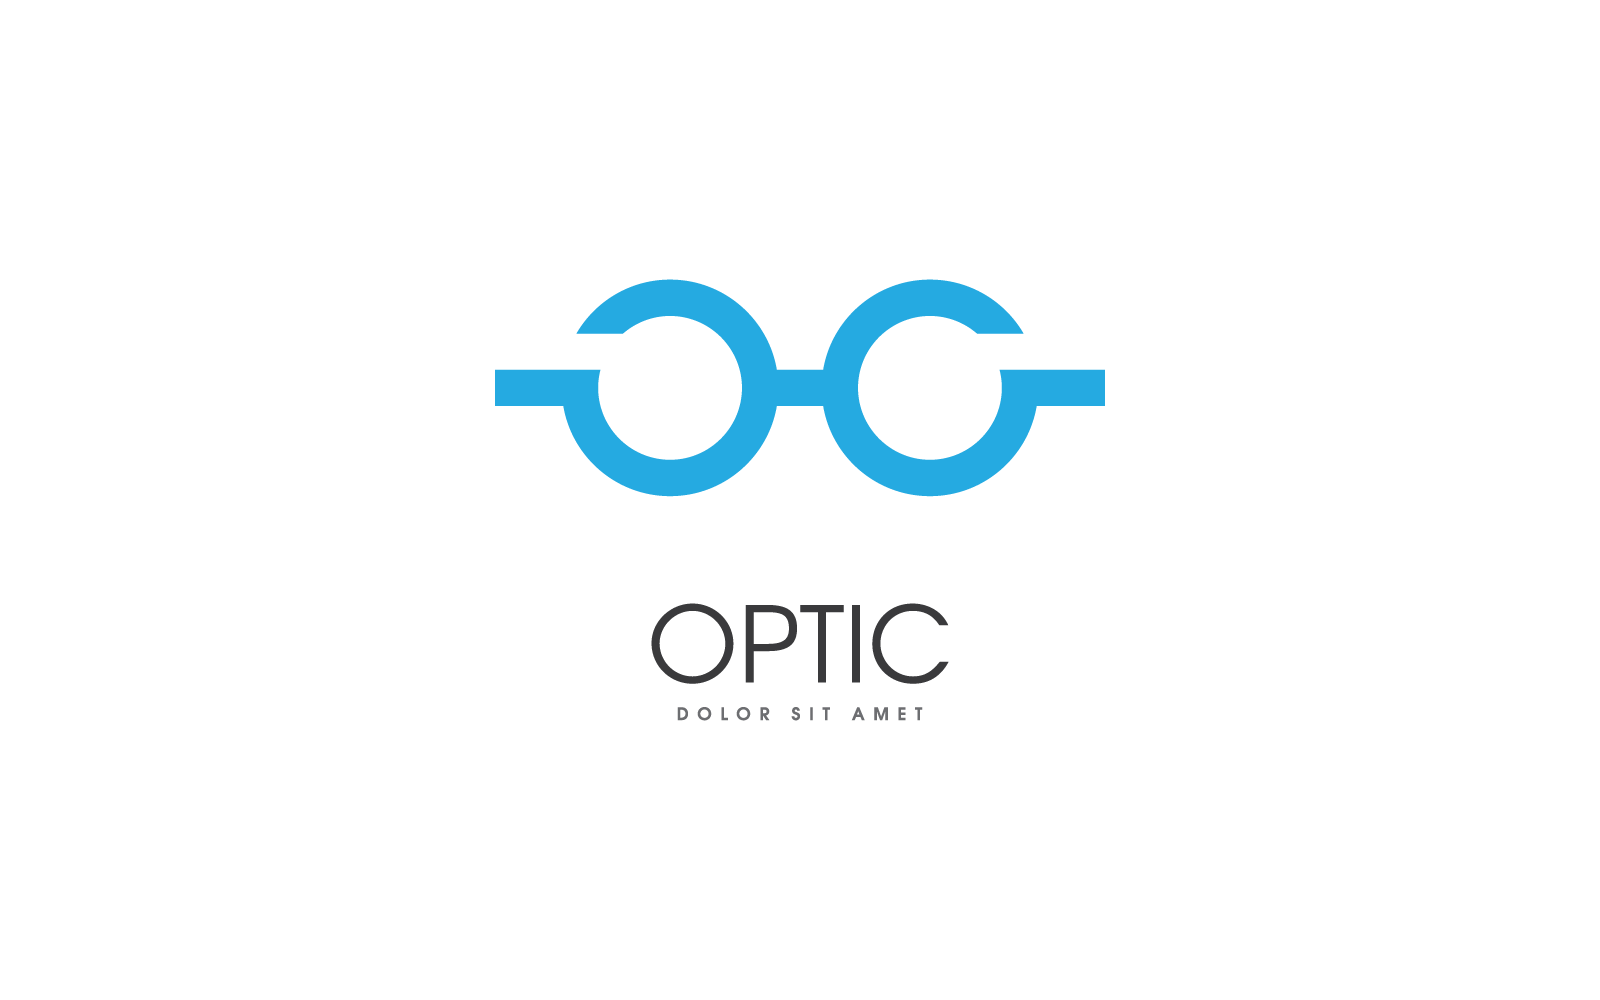 Optic logo illustration vector flat design